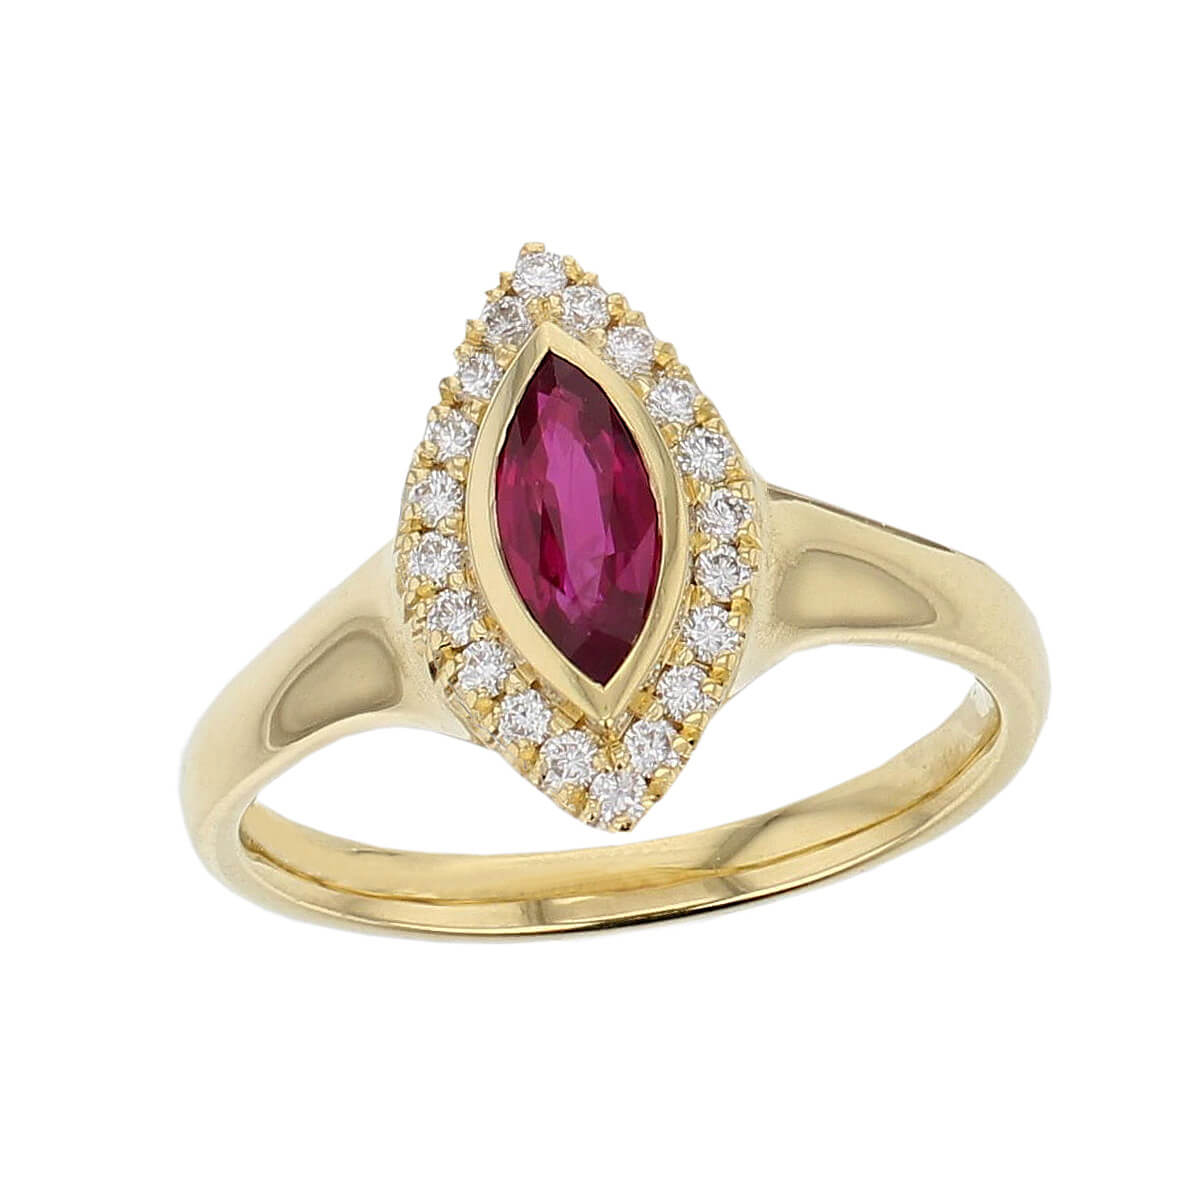 White gold, diamond and ruby ring | DAMIANI